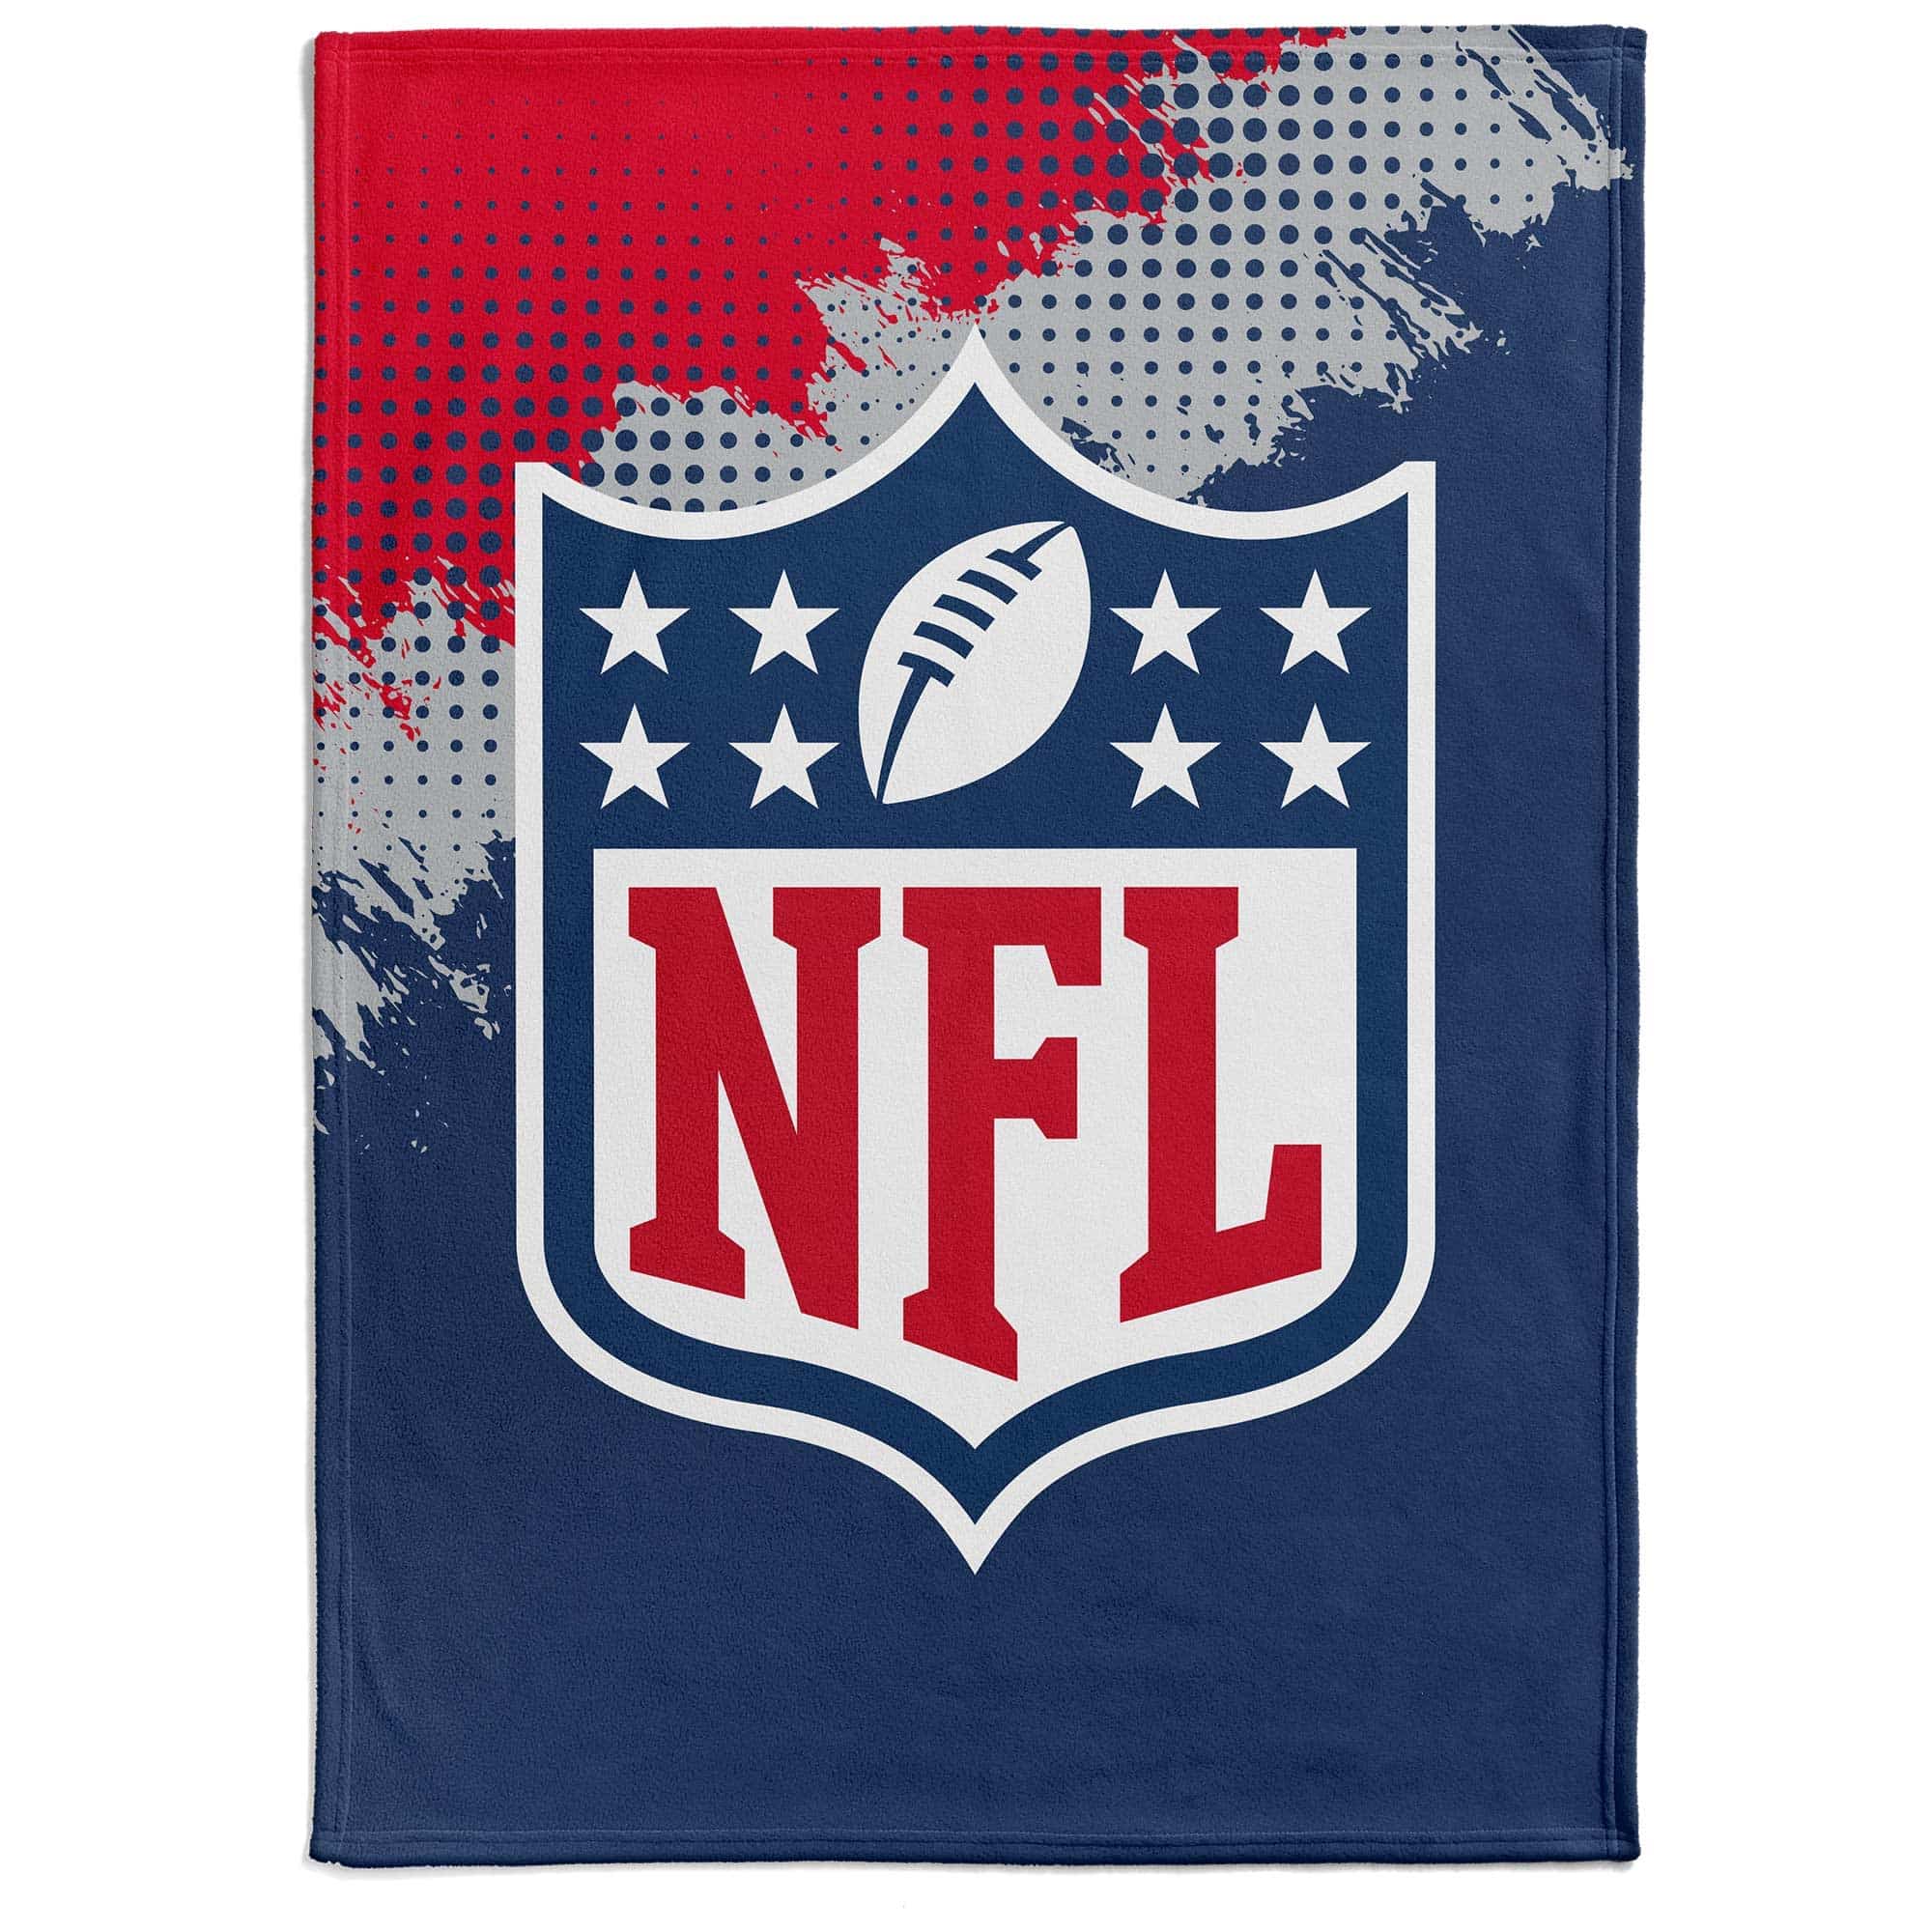 NFL Shield Flannel Decke /Throw CORNER 